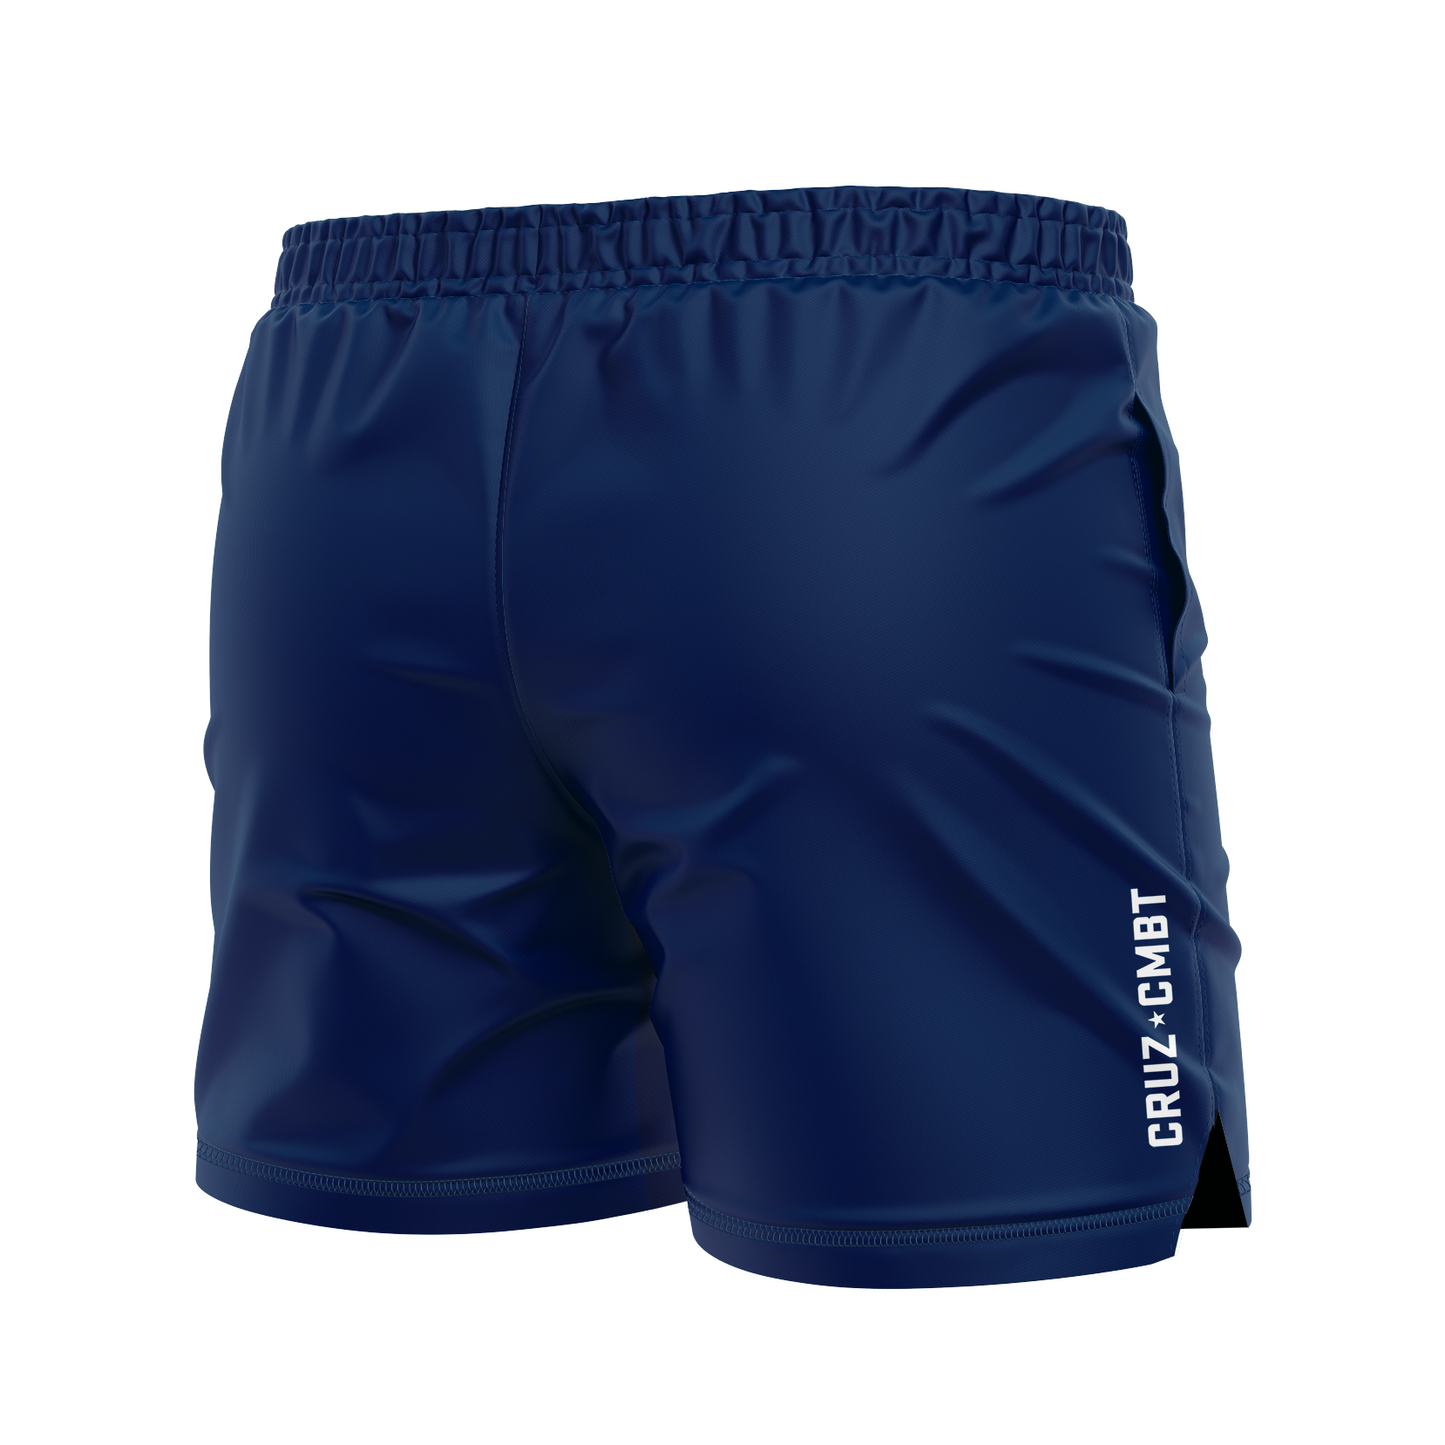 Base Collection men's FC shorts, light navy